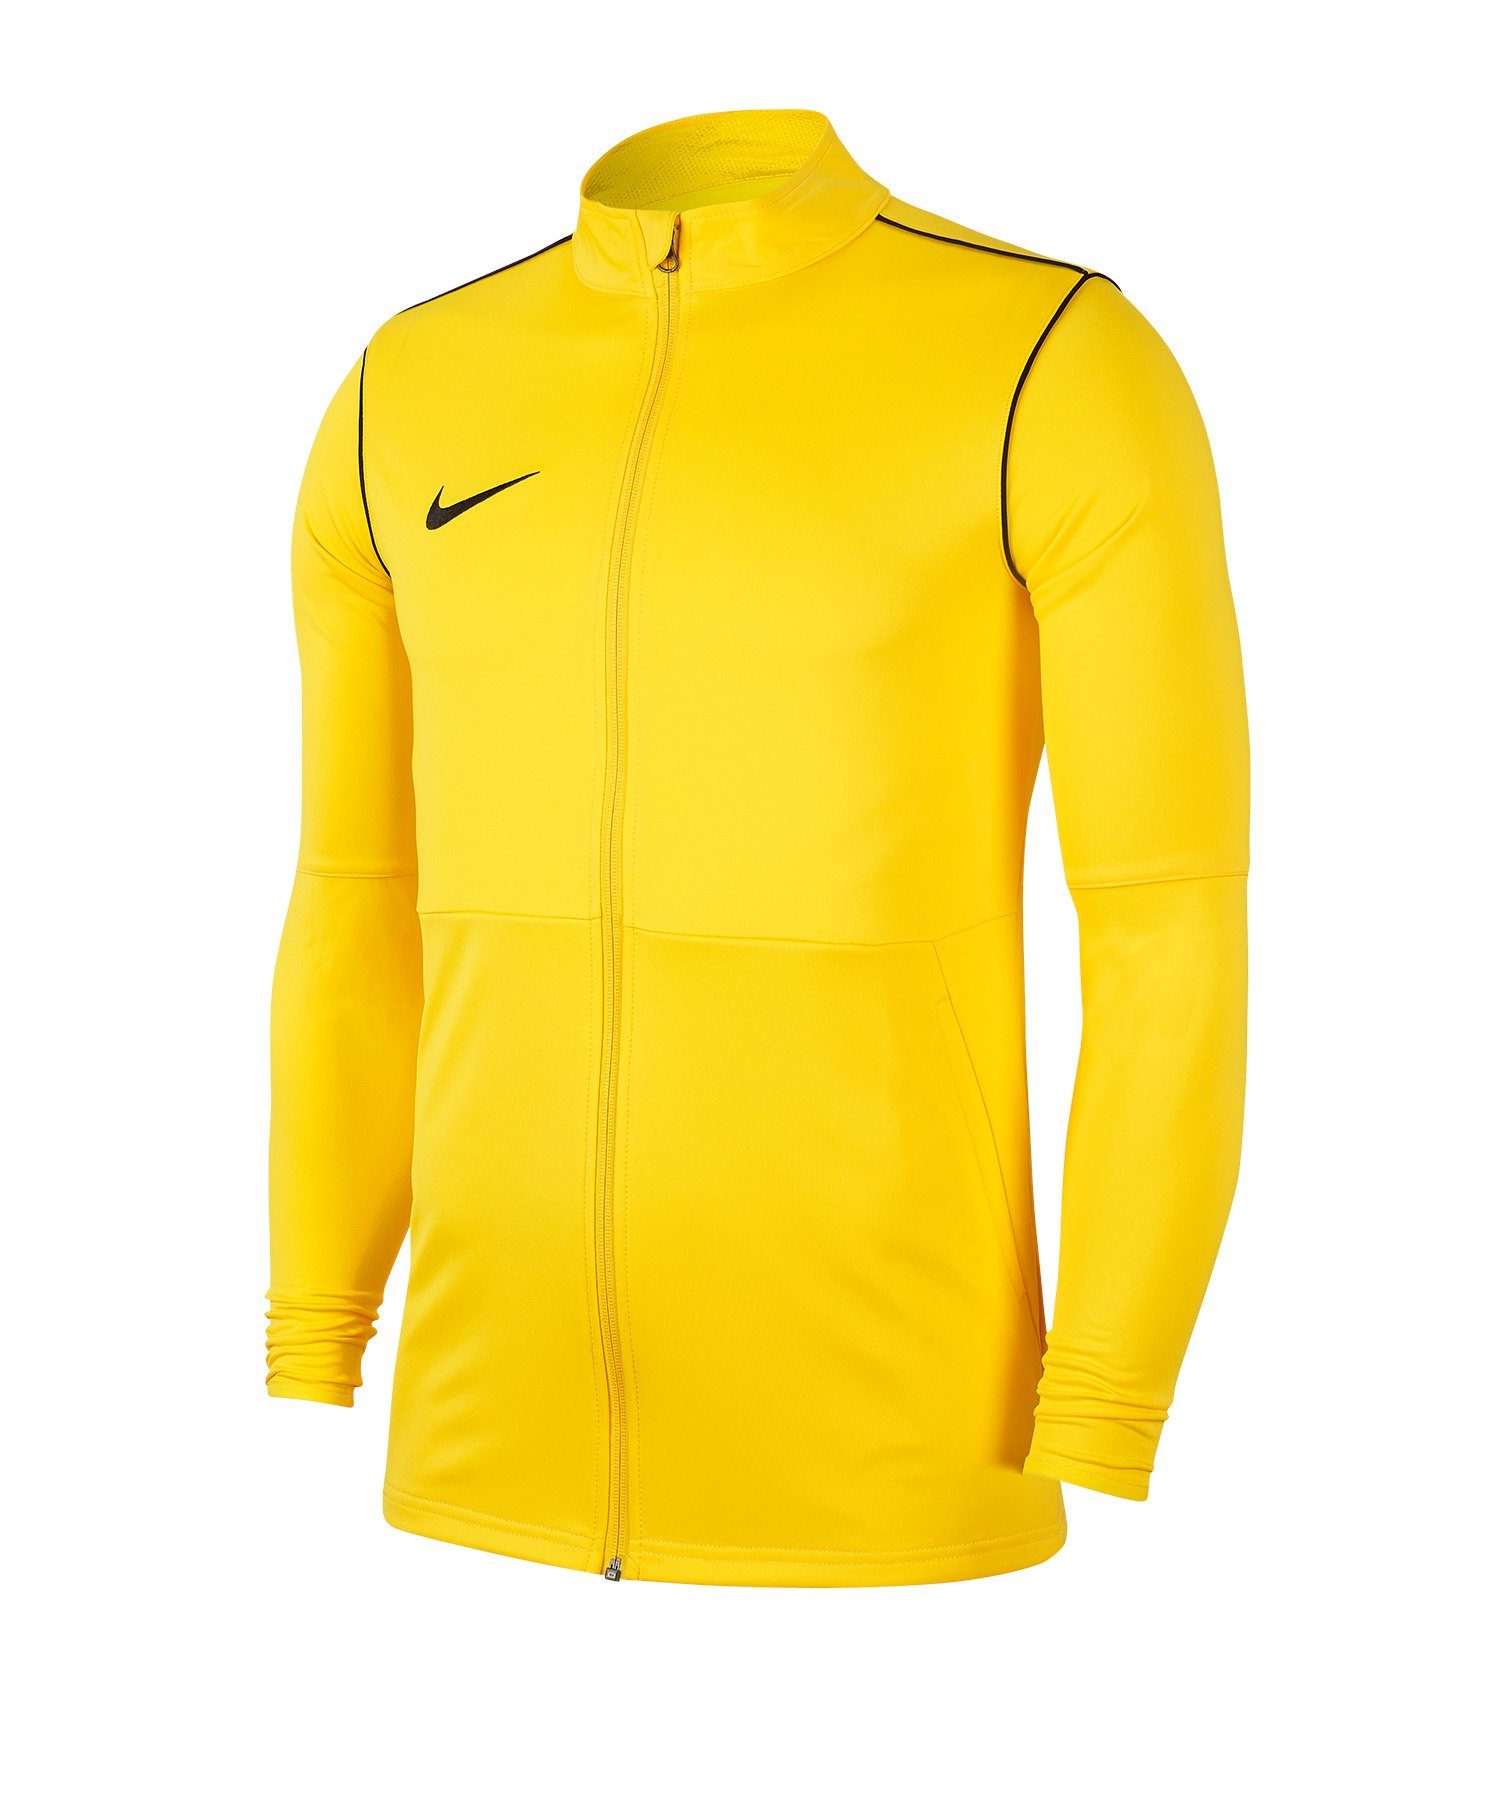 Nike Sweatjacke Park 20 Training Jacke gelb